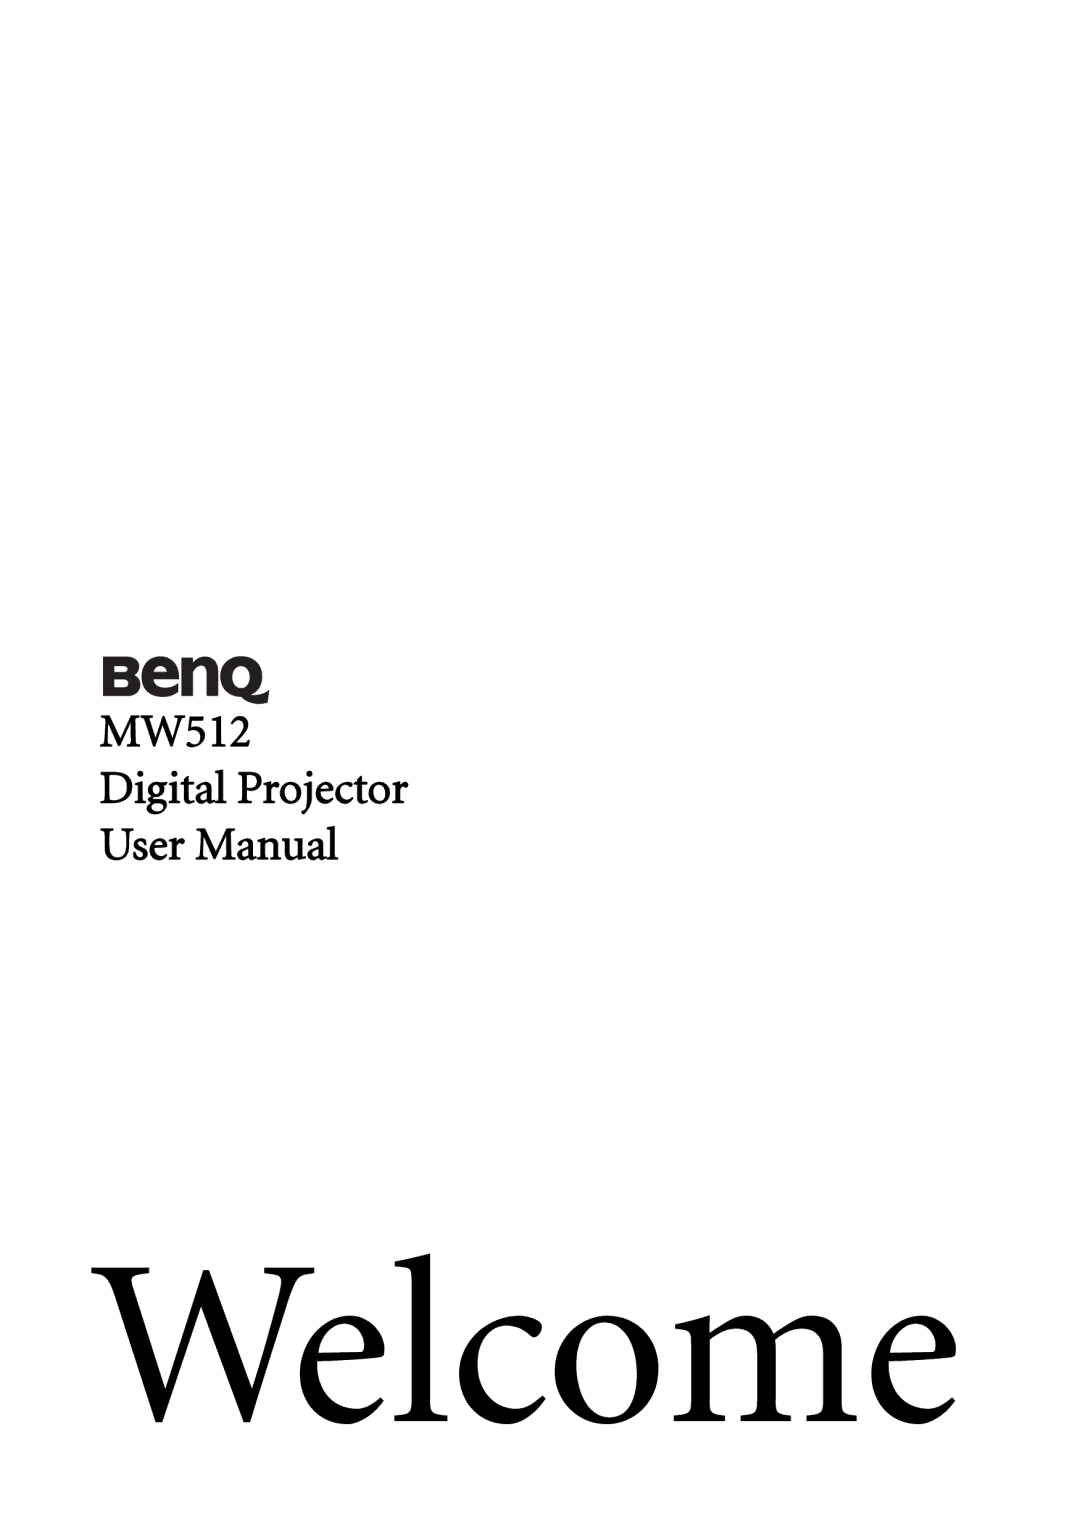 BenQ user manual Welcome, MW512 Digital Projector 